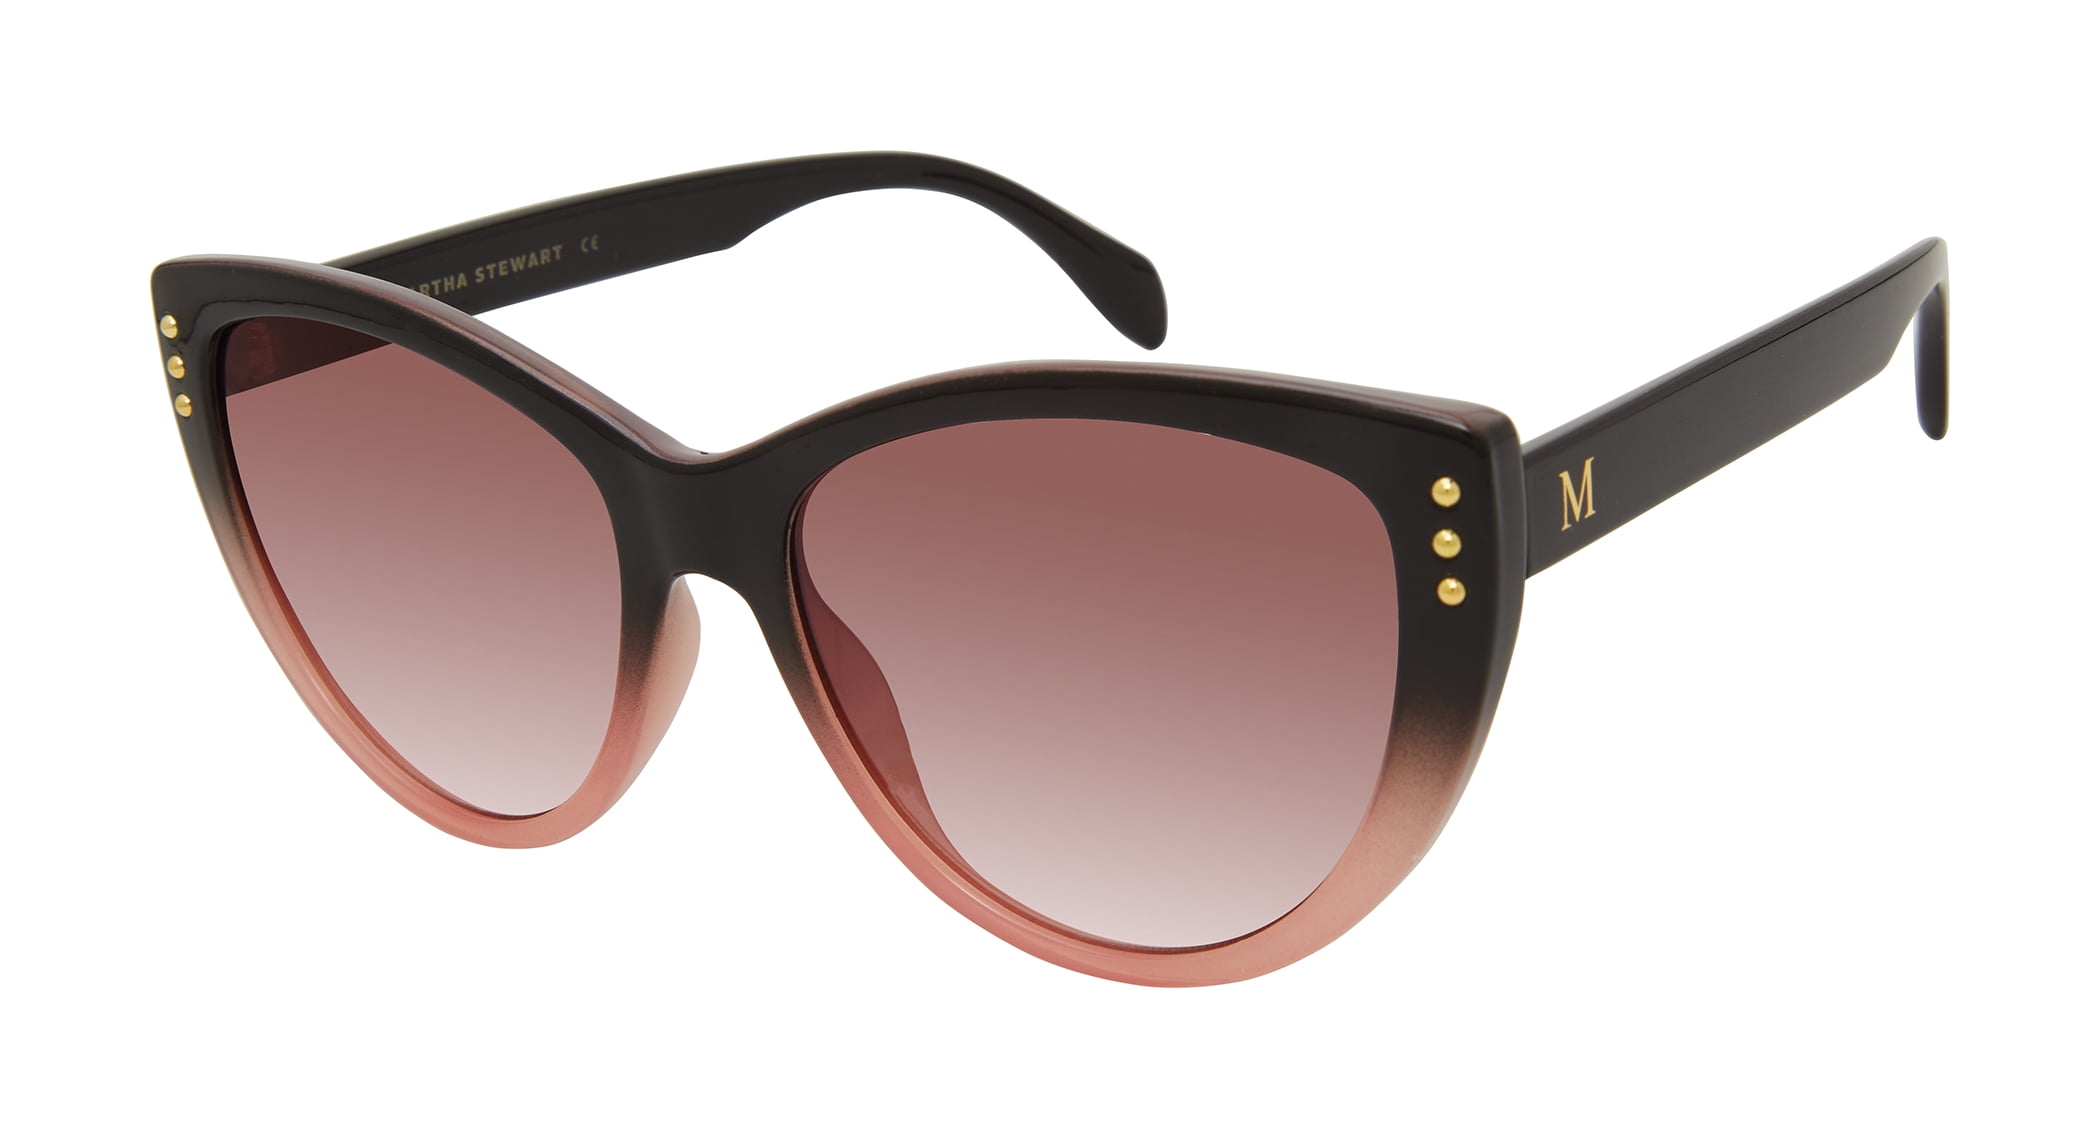 Martha Stewart MS117 Glamorous Adult UV Protective Cat Eye Sunglasses ...